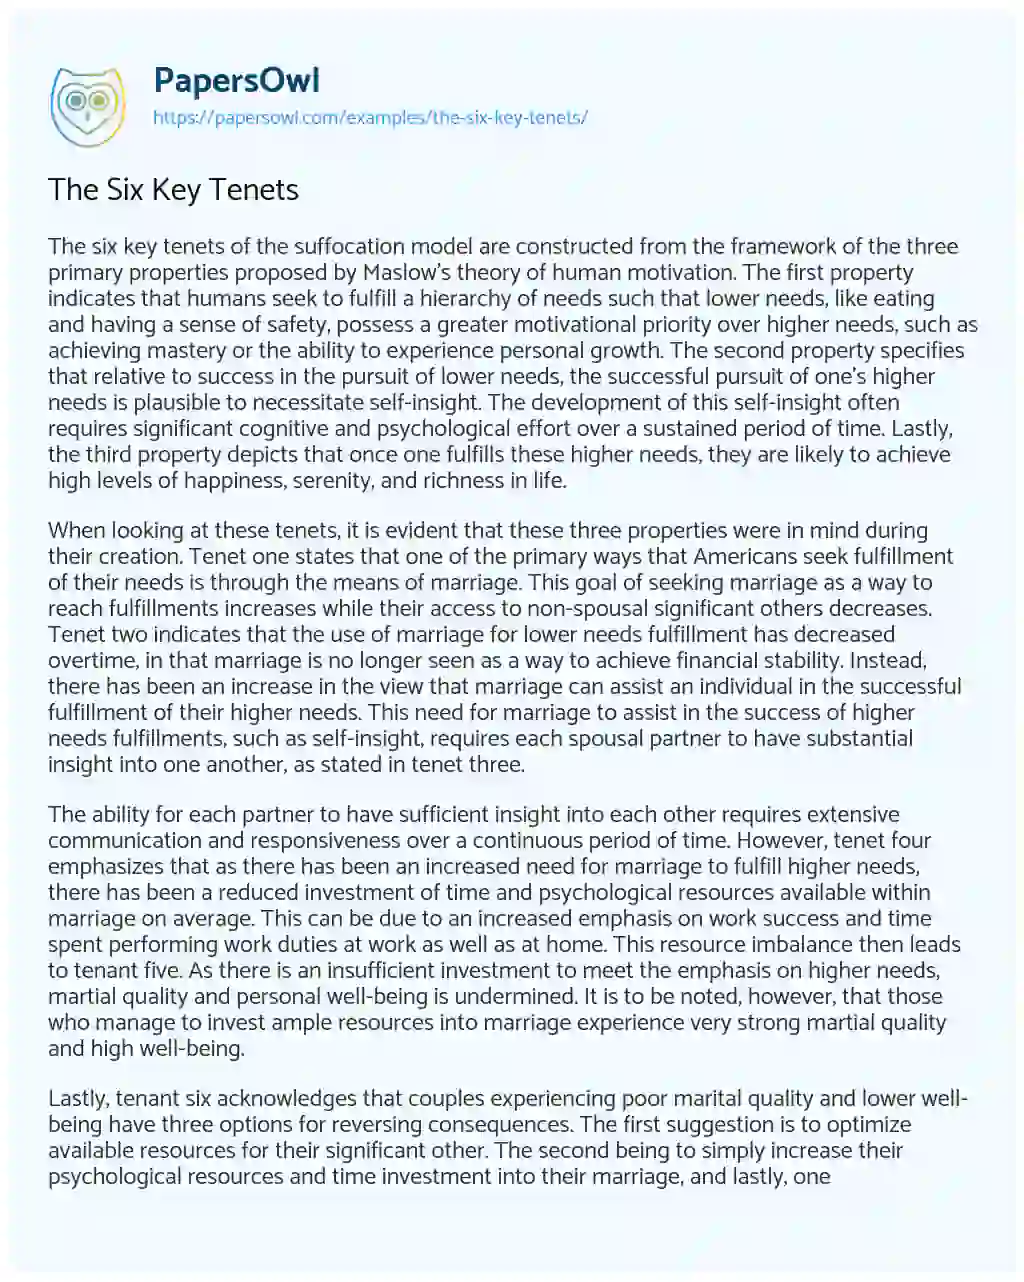 The Six Key Tenets essay